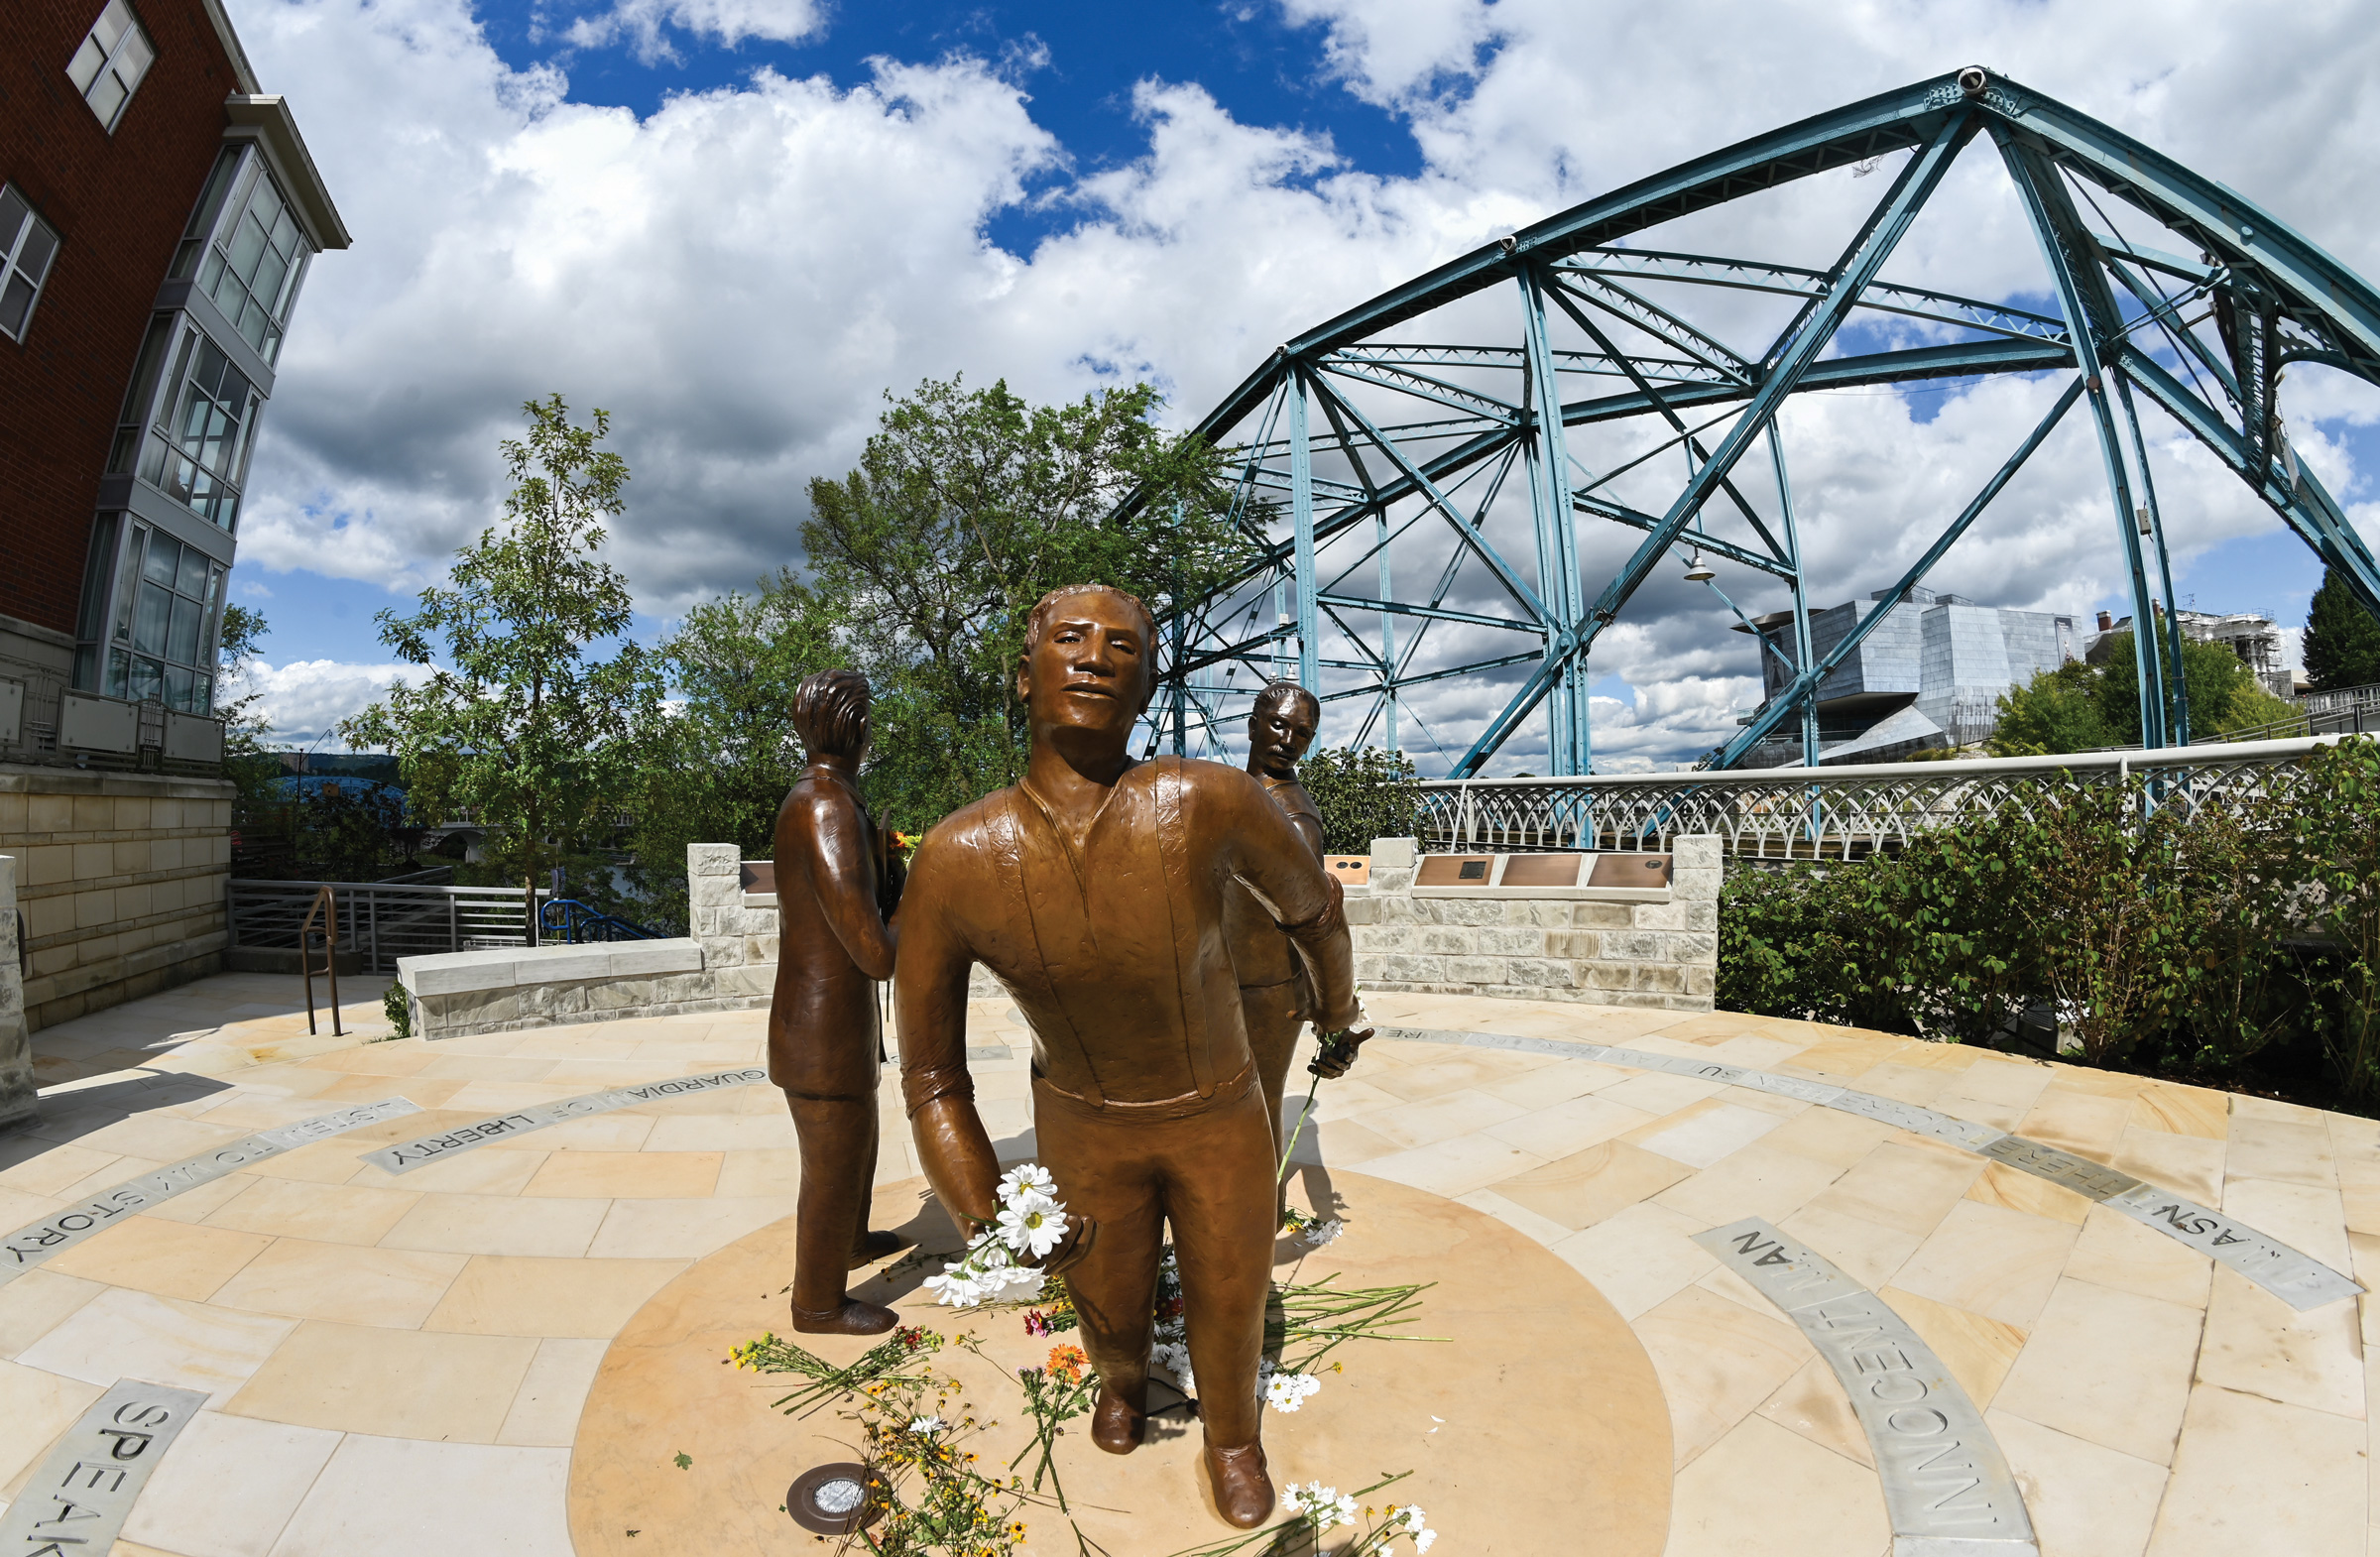 memorial bronze sculpture dedicated to the memory of Ed Johnson